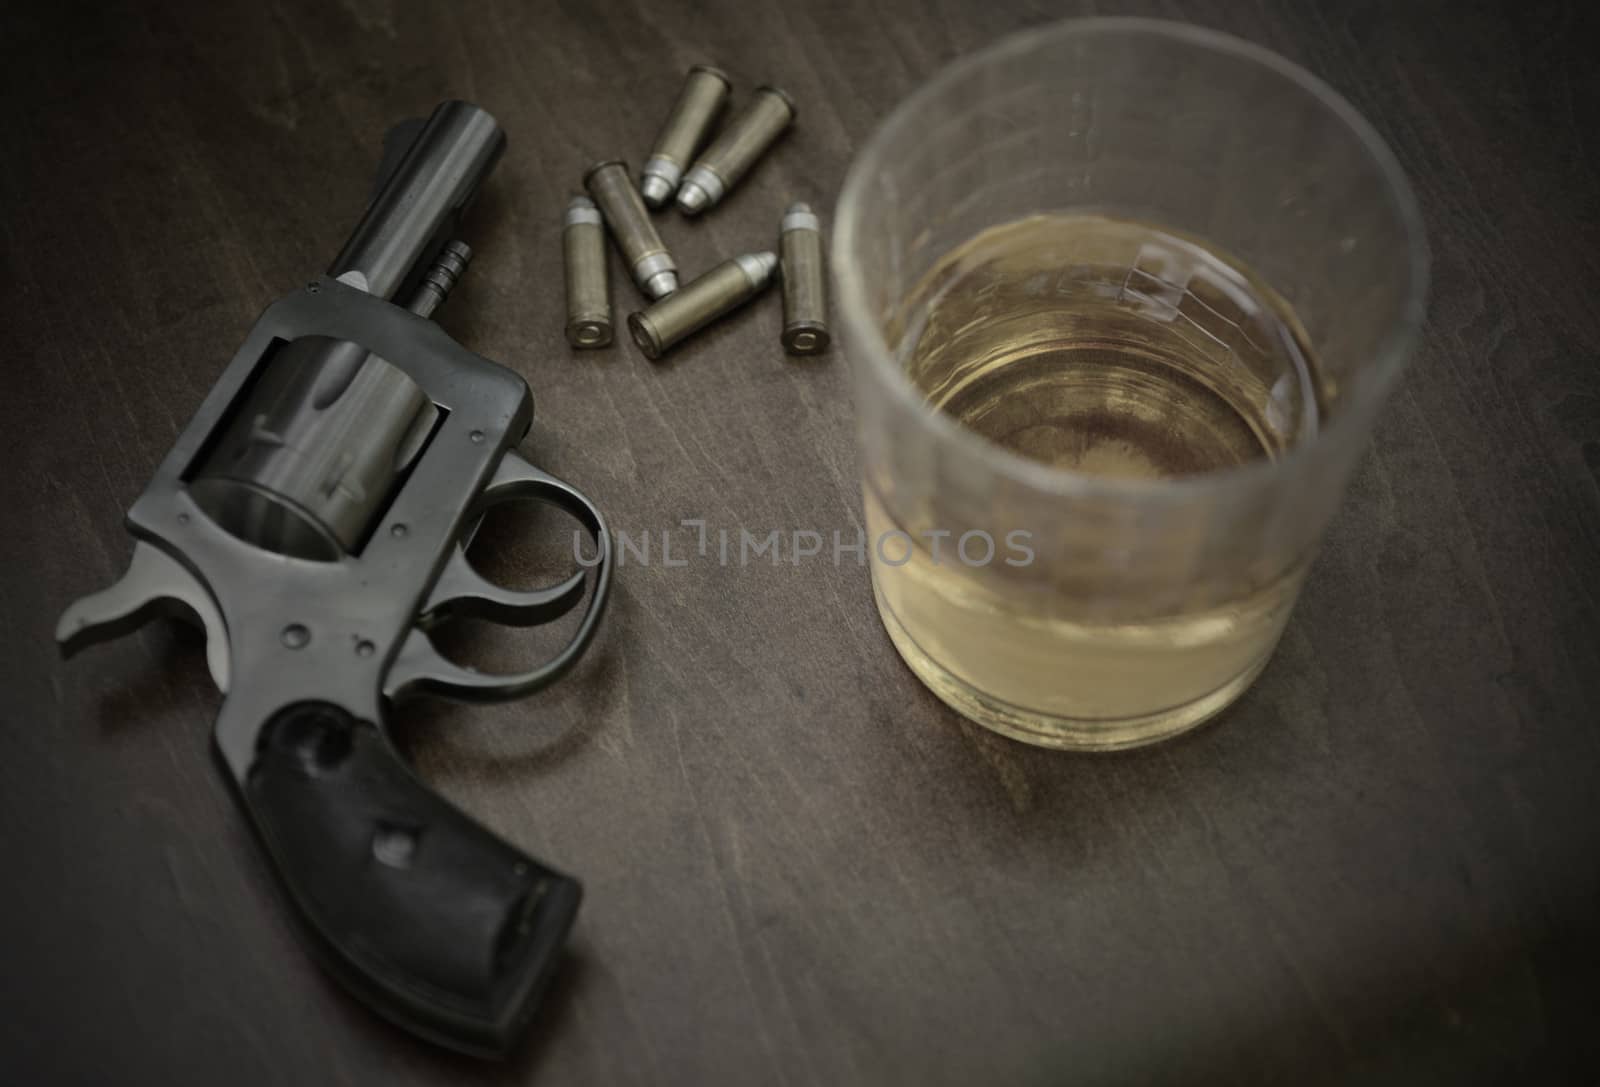 booze, gun and bullet by ftlaudgirl